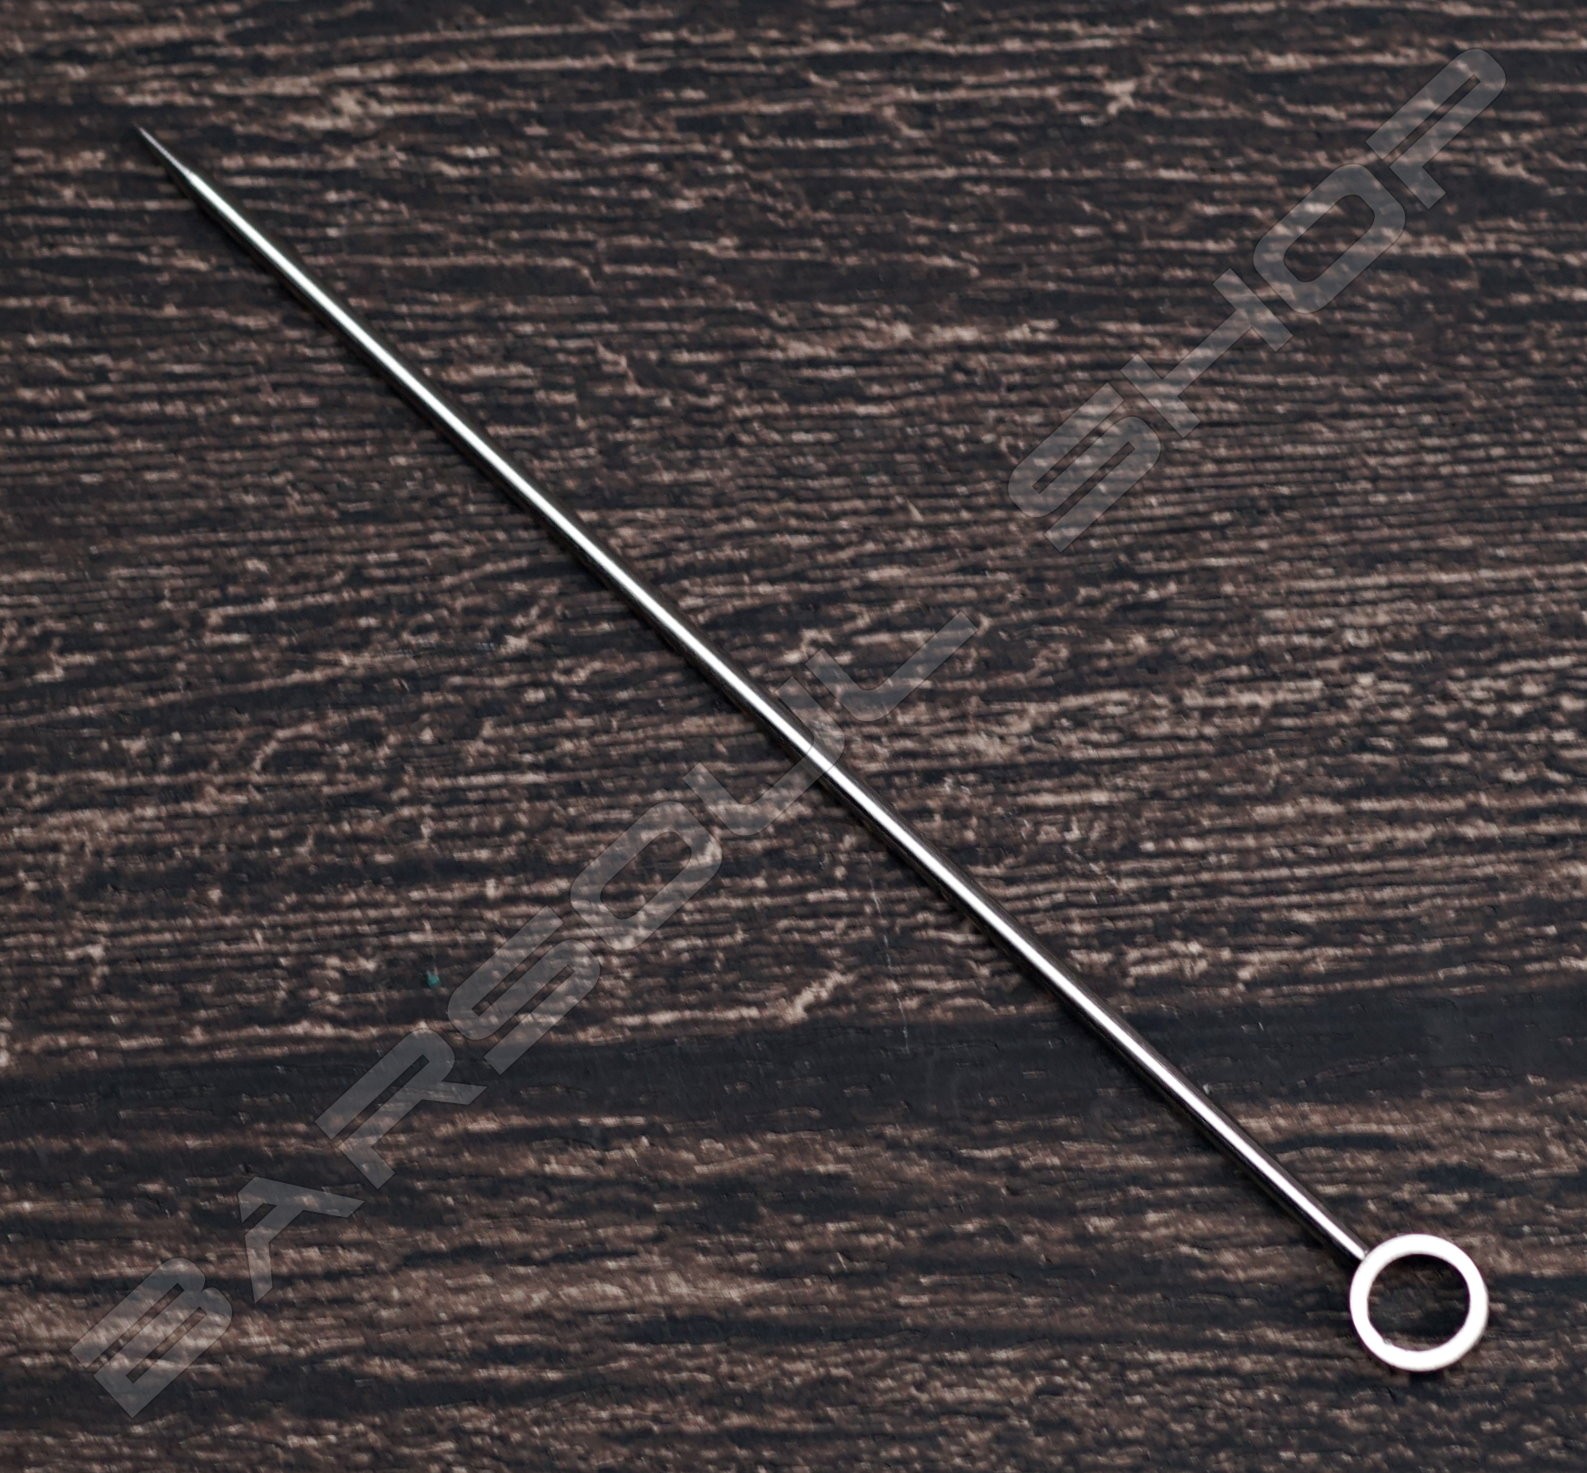 圓圈金屬劍插(銀色)(10送2) circle steel cocktail stick(silver)